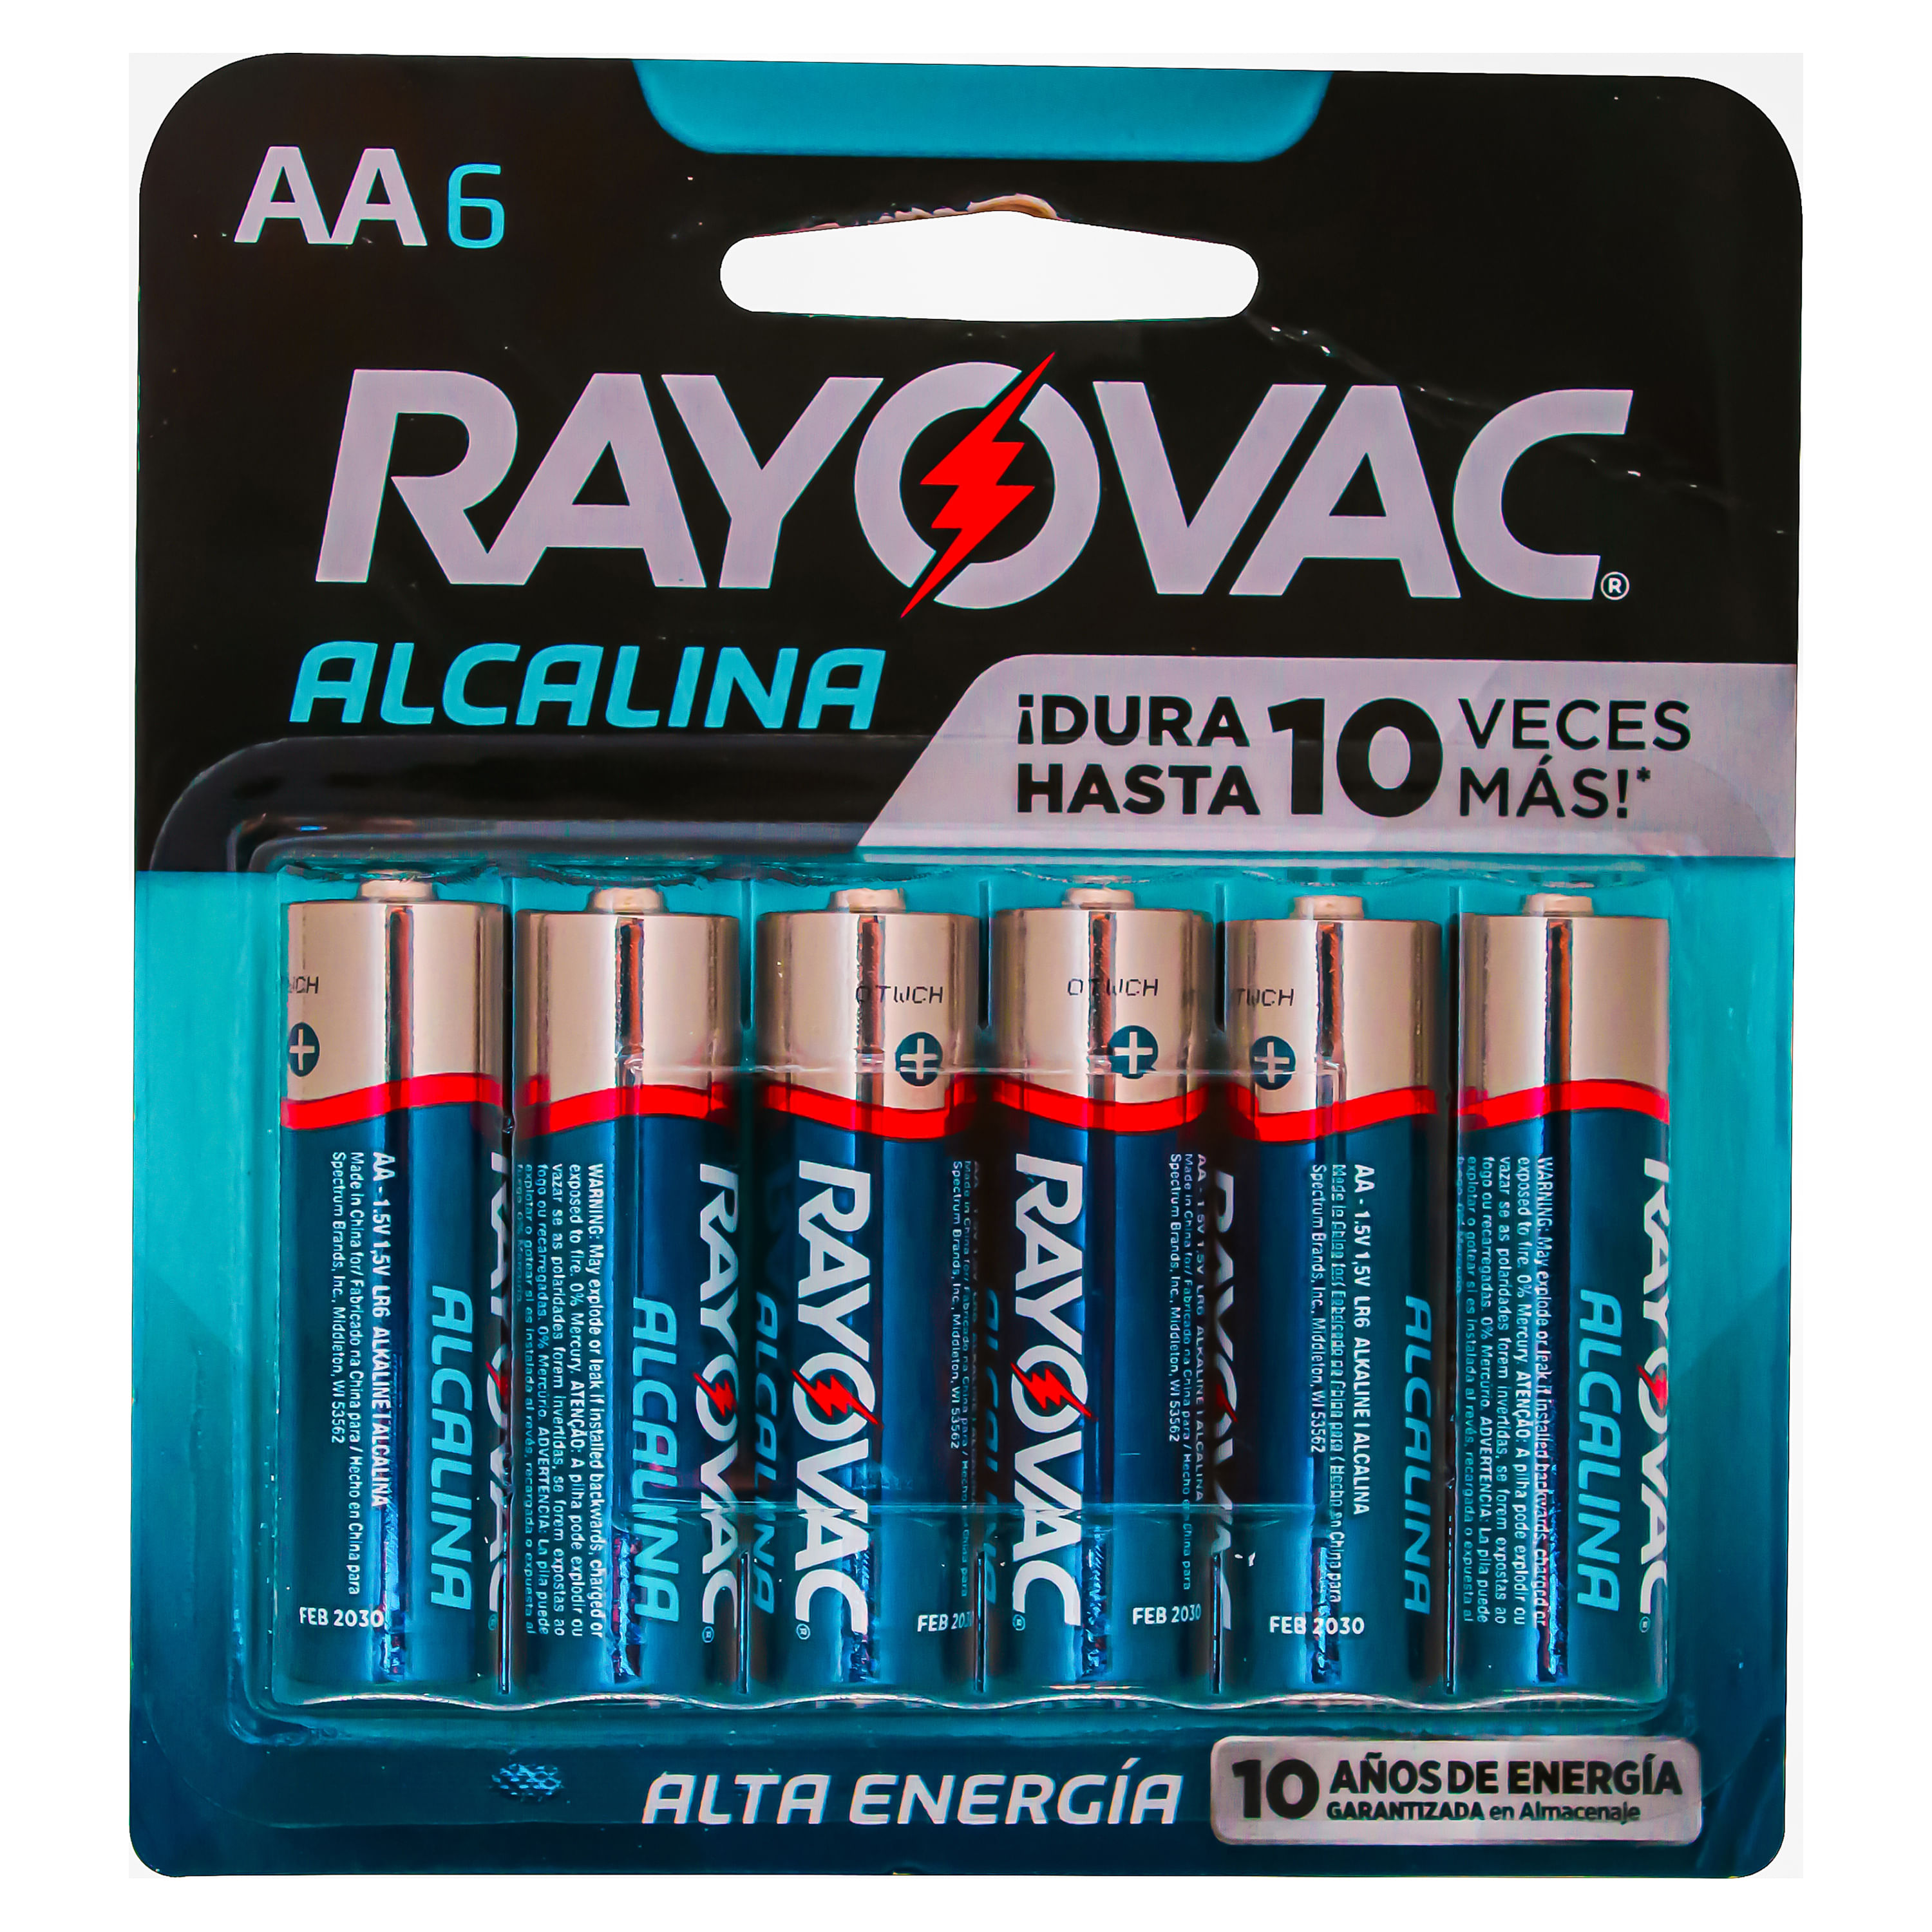 Rayovac Pilas AAA, alcalinas, 8 unidades